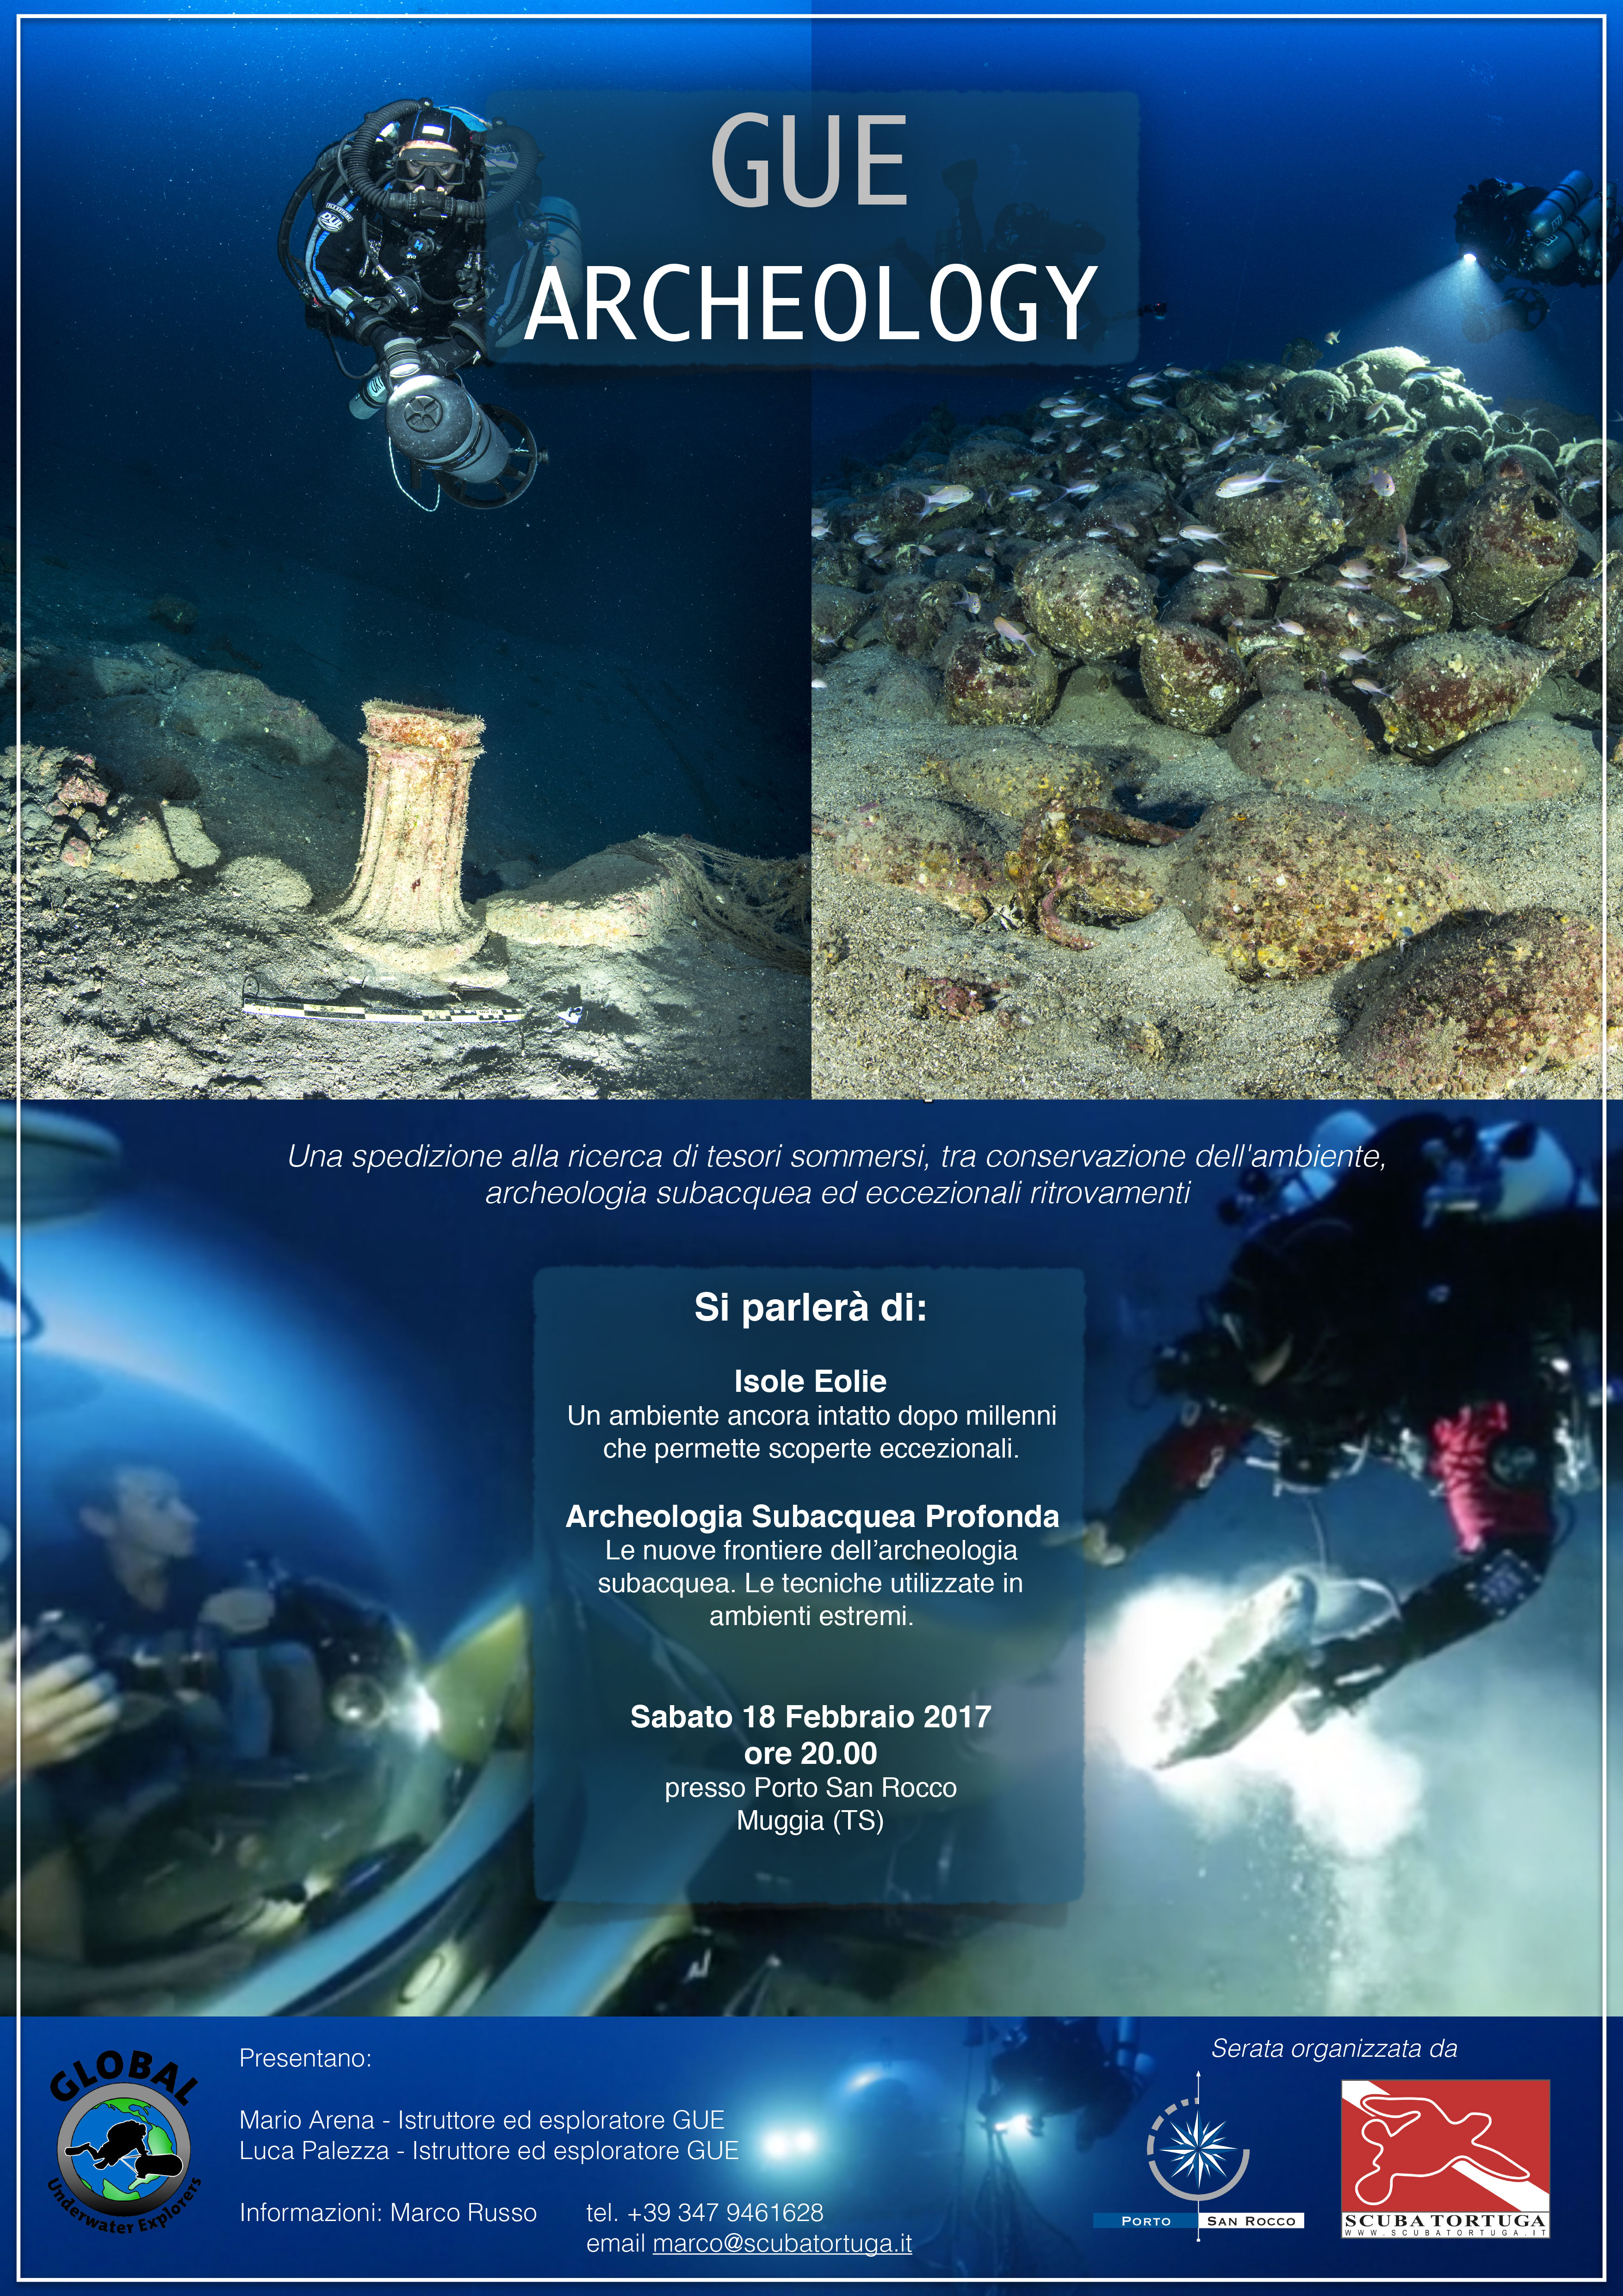 GUE Archeology - Scuba Tortuga - Trieste Archeologia subacquea. underwater archeology